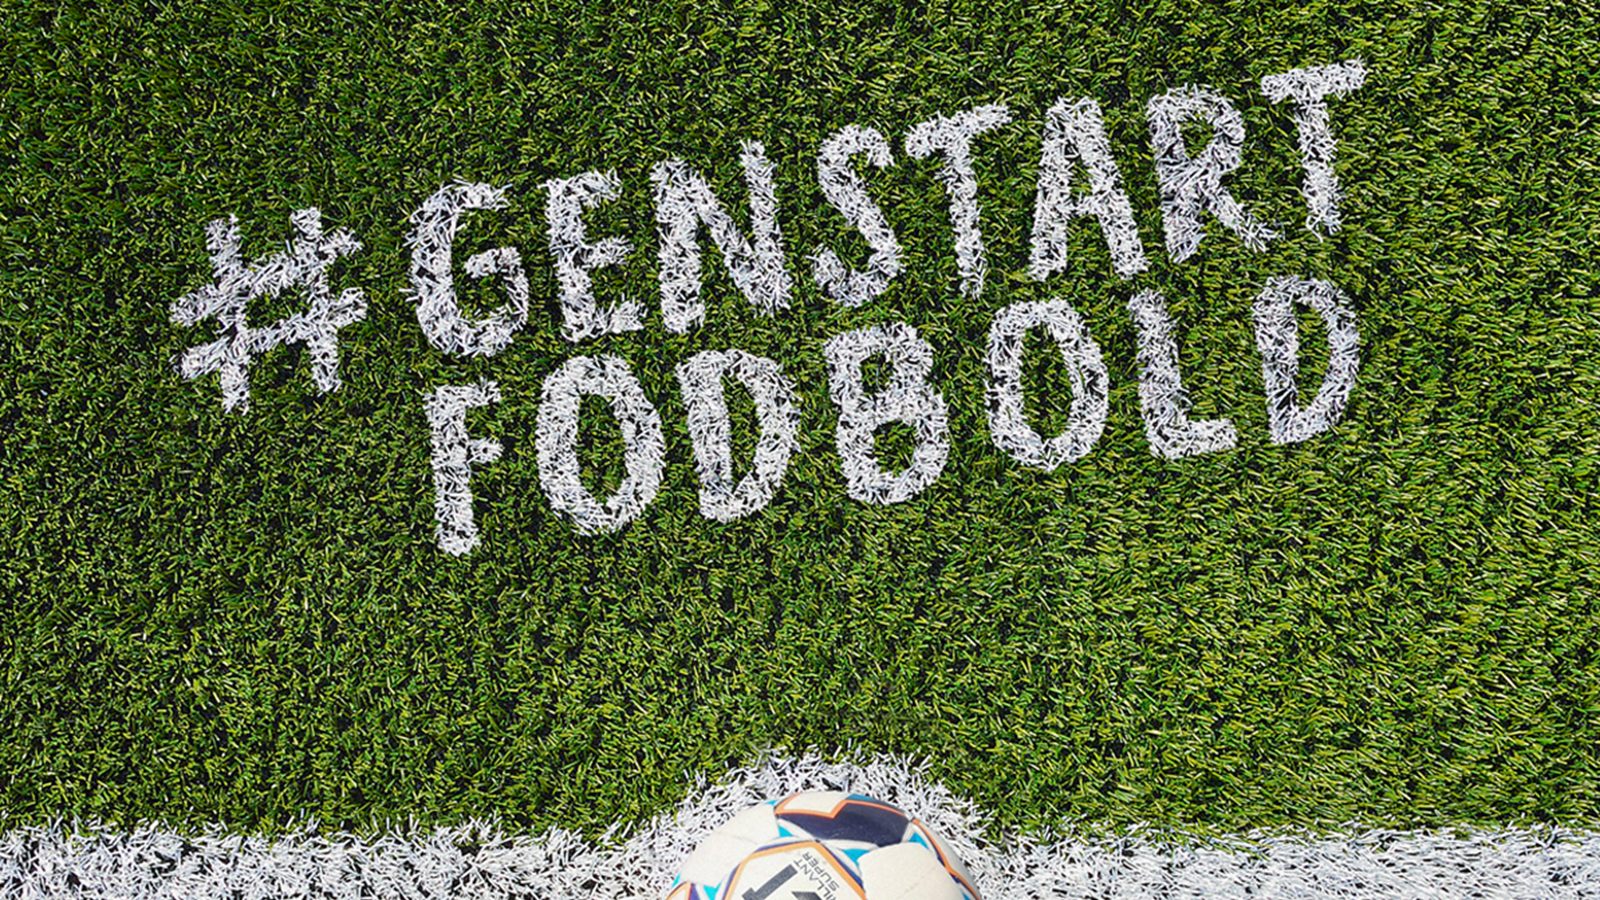 Bliv klogere på kampagnen #GenstartFodbold